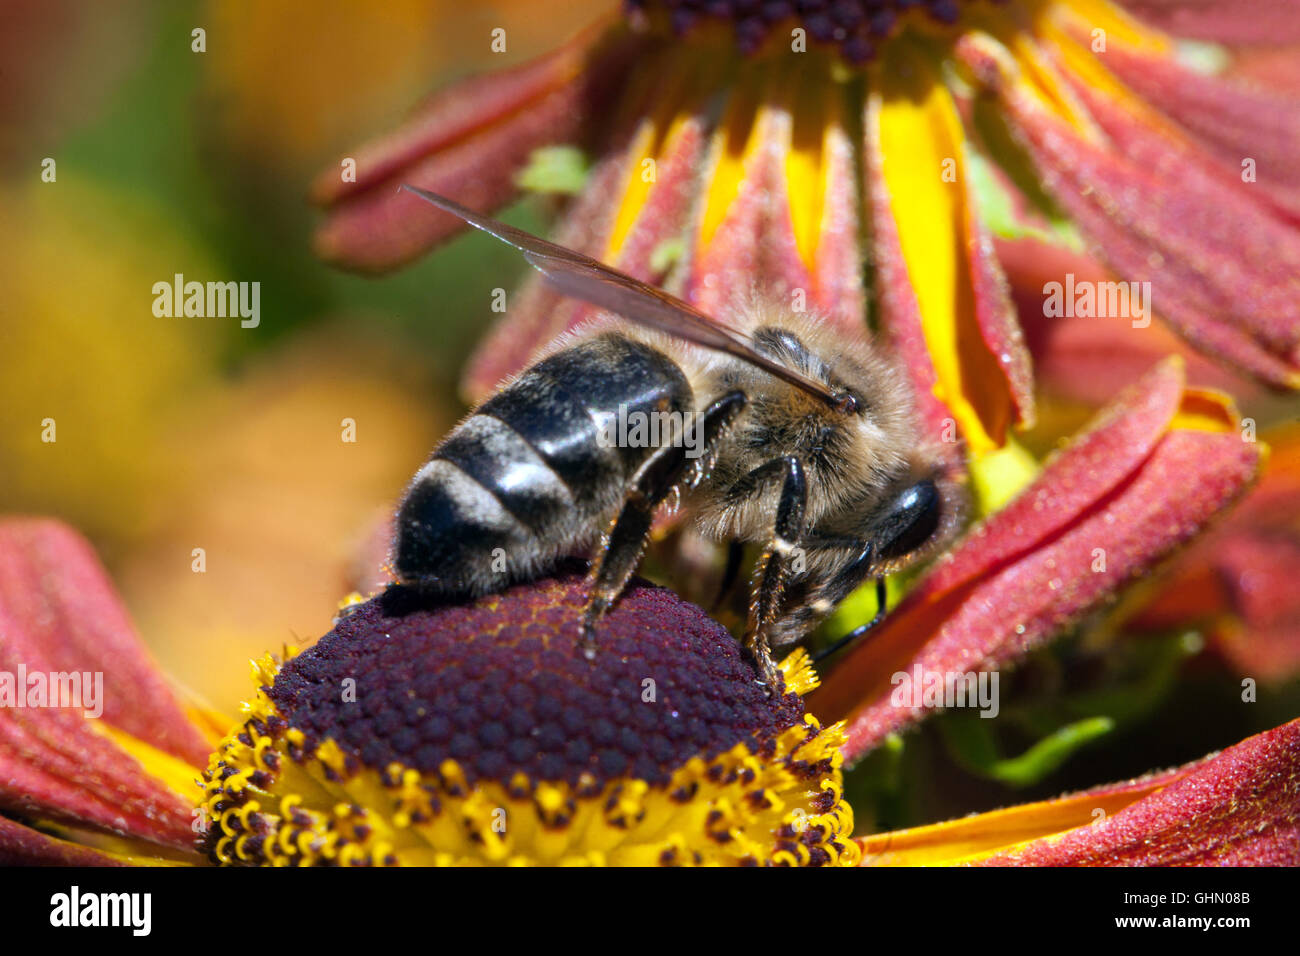 Honey Bee on flower bee close up Helenium 'Flammenrad', Cooper Orange Helens flower Sneezeweed collecting nectar feeding Stock Photo